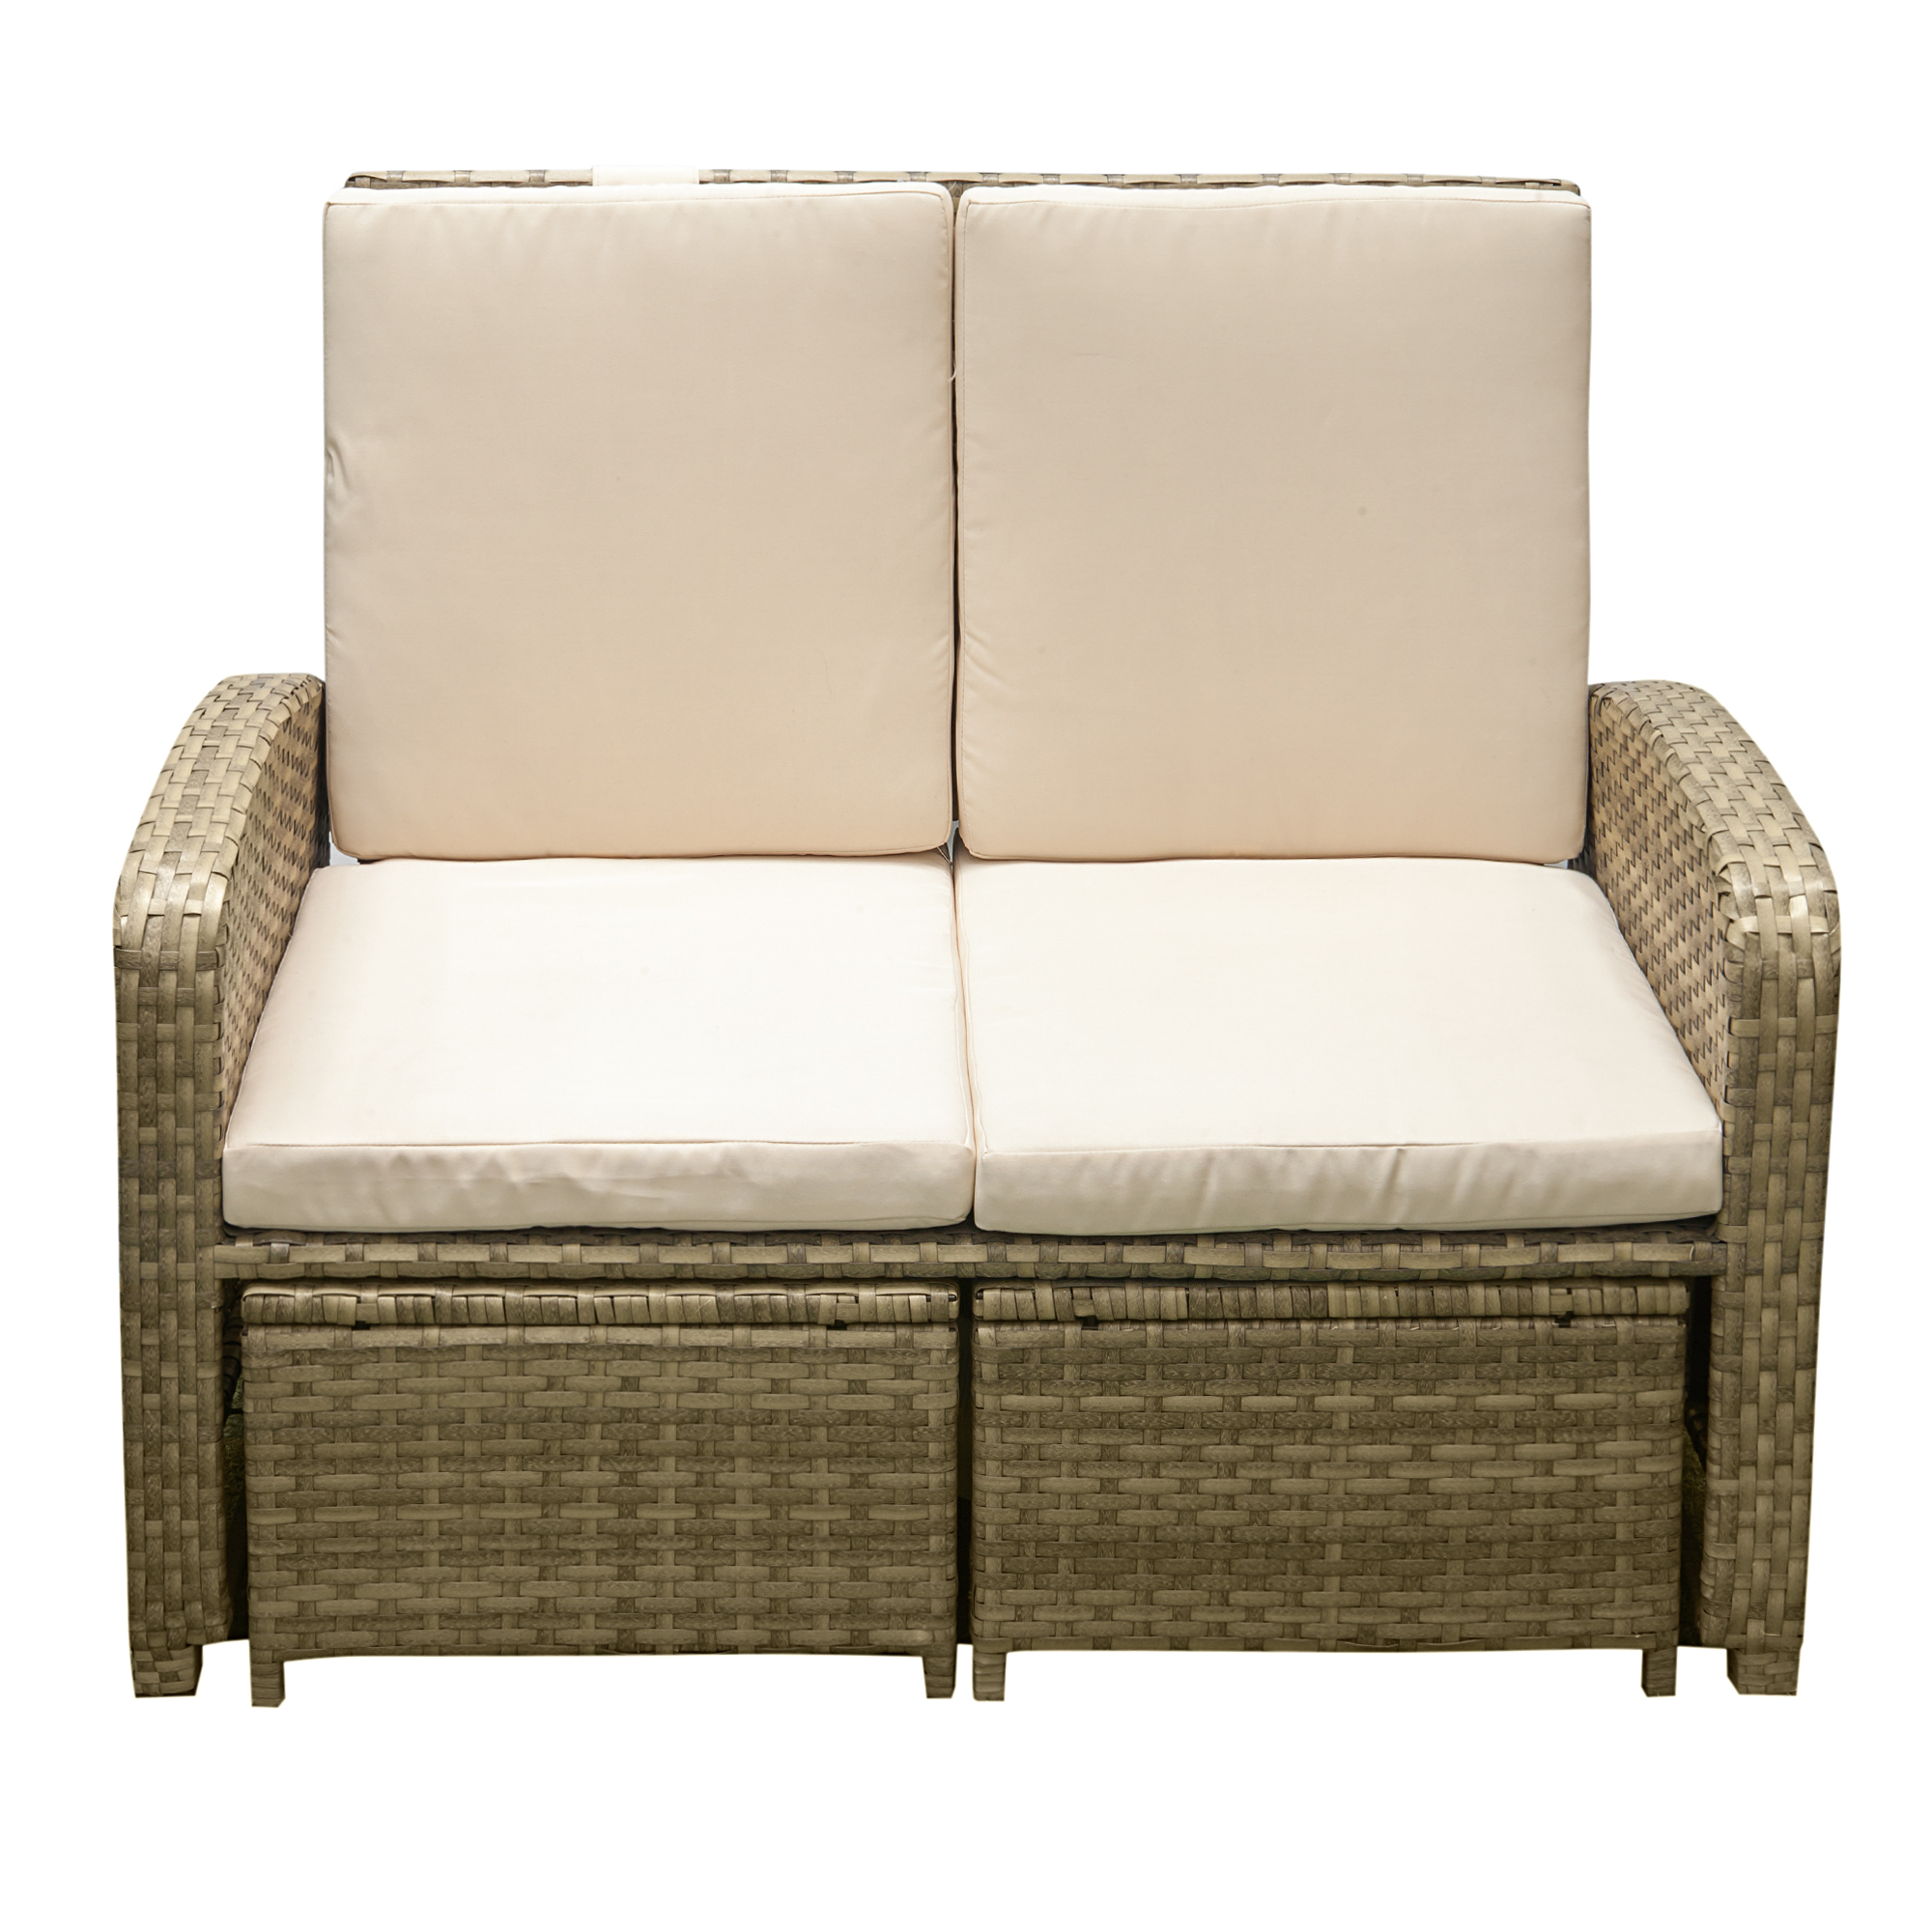 Комплект мебели Jlip (S3223B/S3223A/S3223C), цвет бежевый, молочный (подушки), размер 116 х 73 х 91 см - фото 3